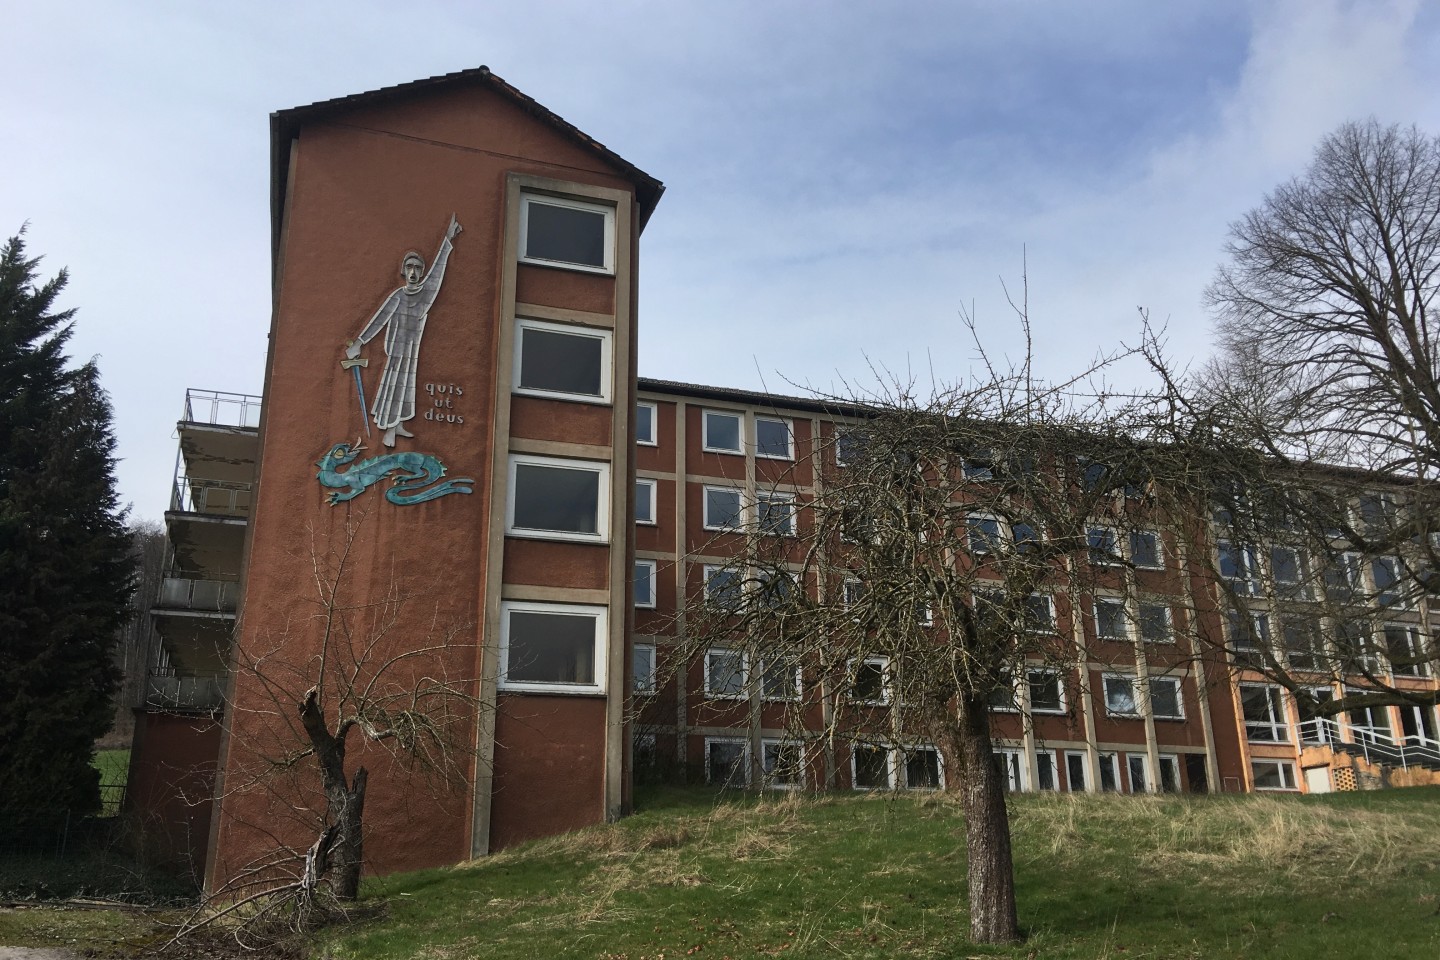 Landeseigene Flüchtlingsunterkunft in Bad Driburg Bezirksregierung Detmold schafft 200 Plätze